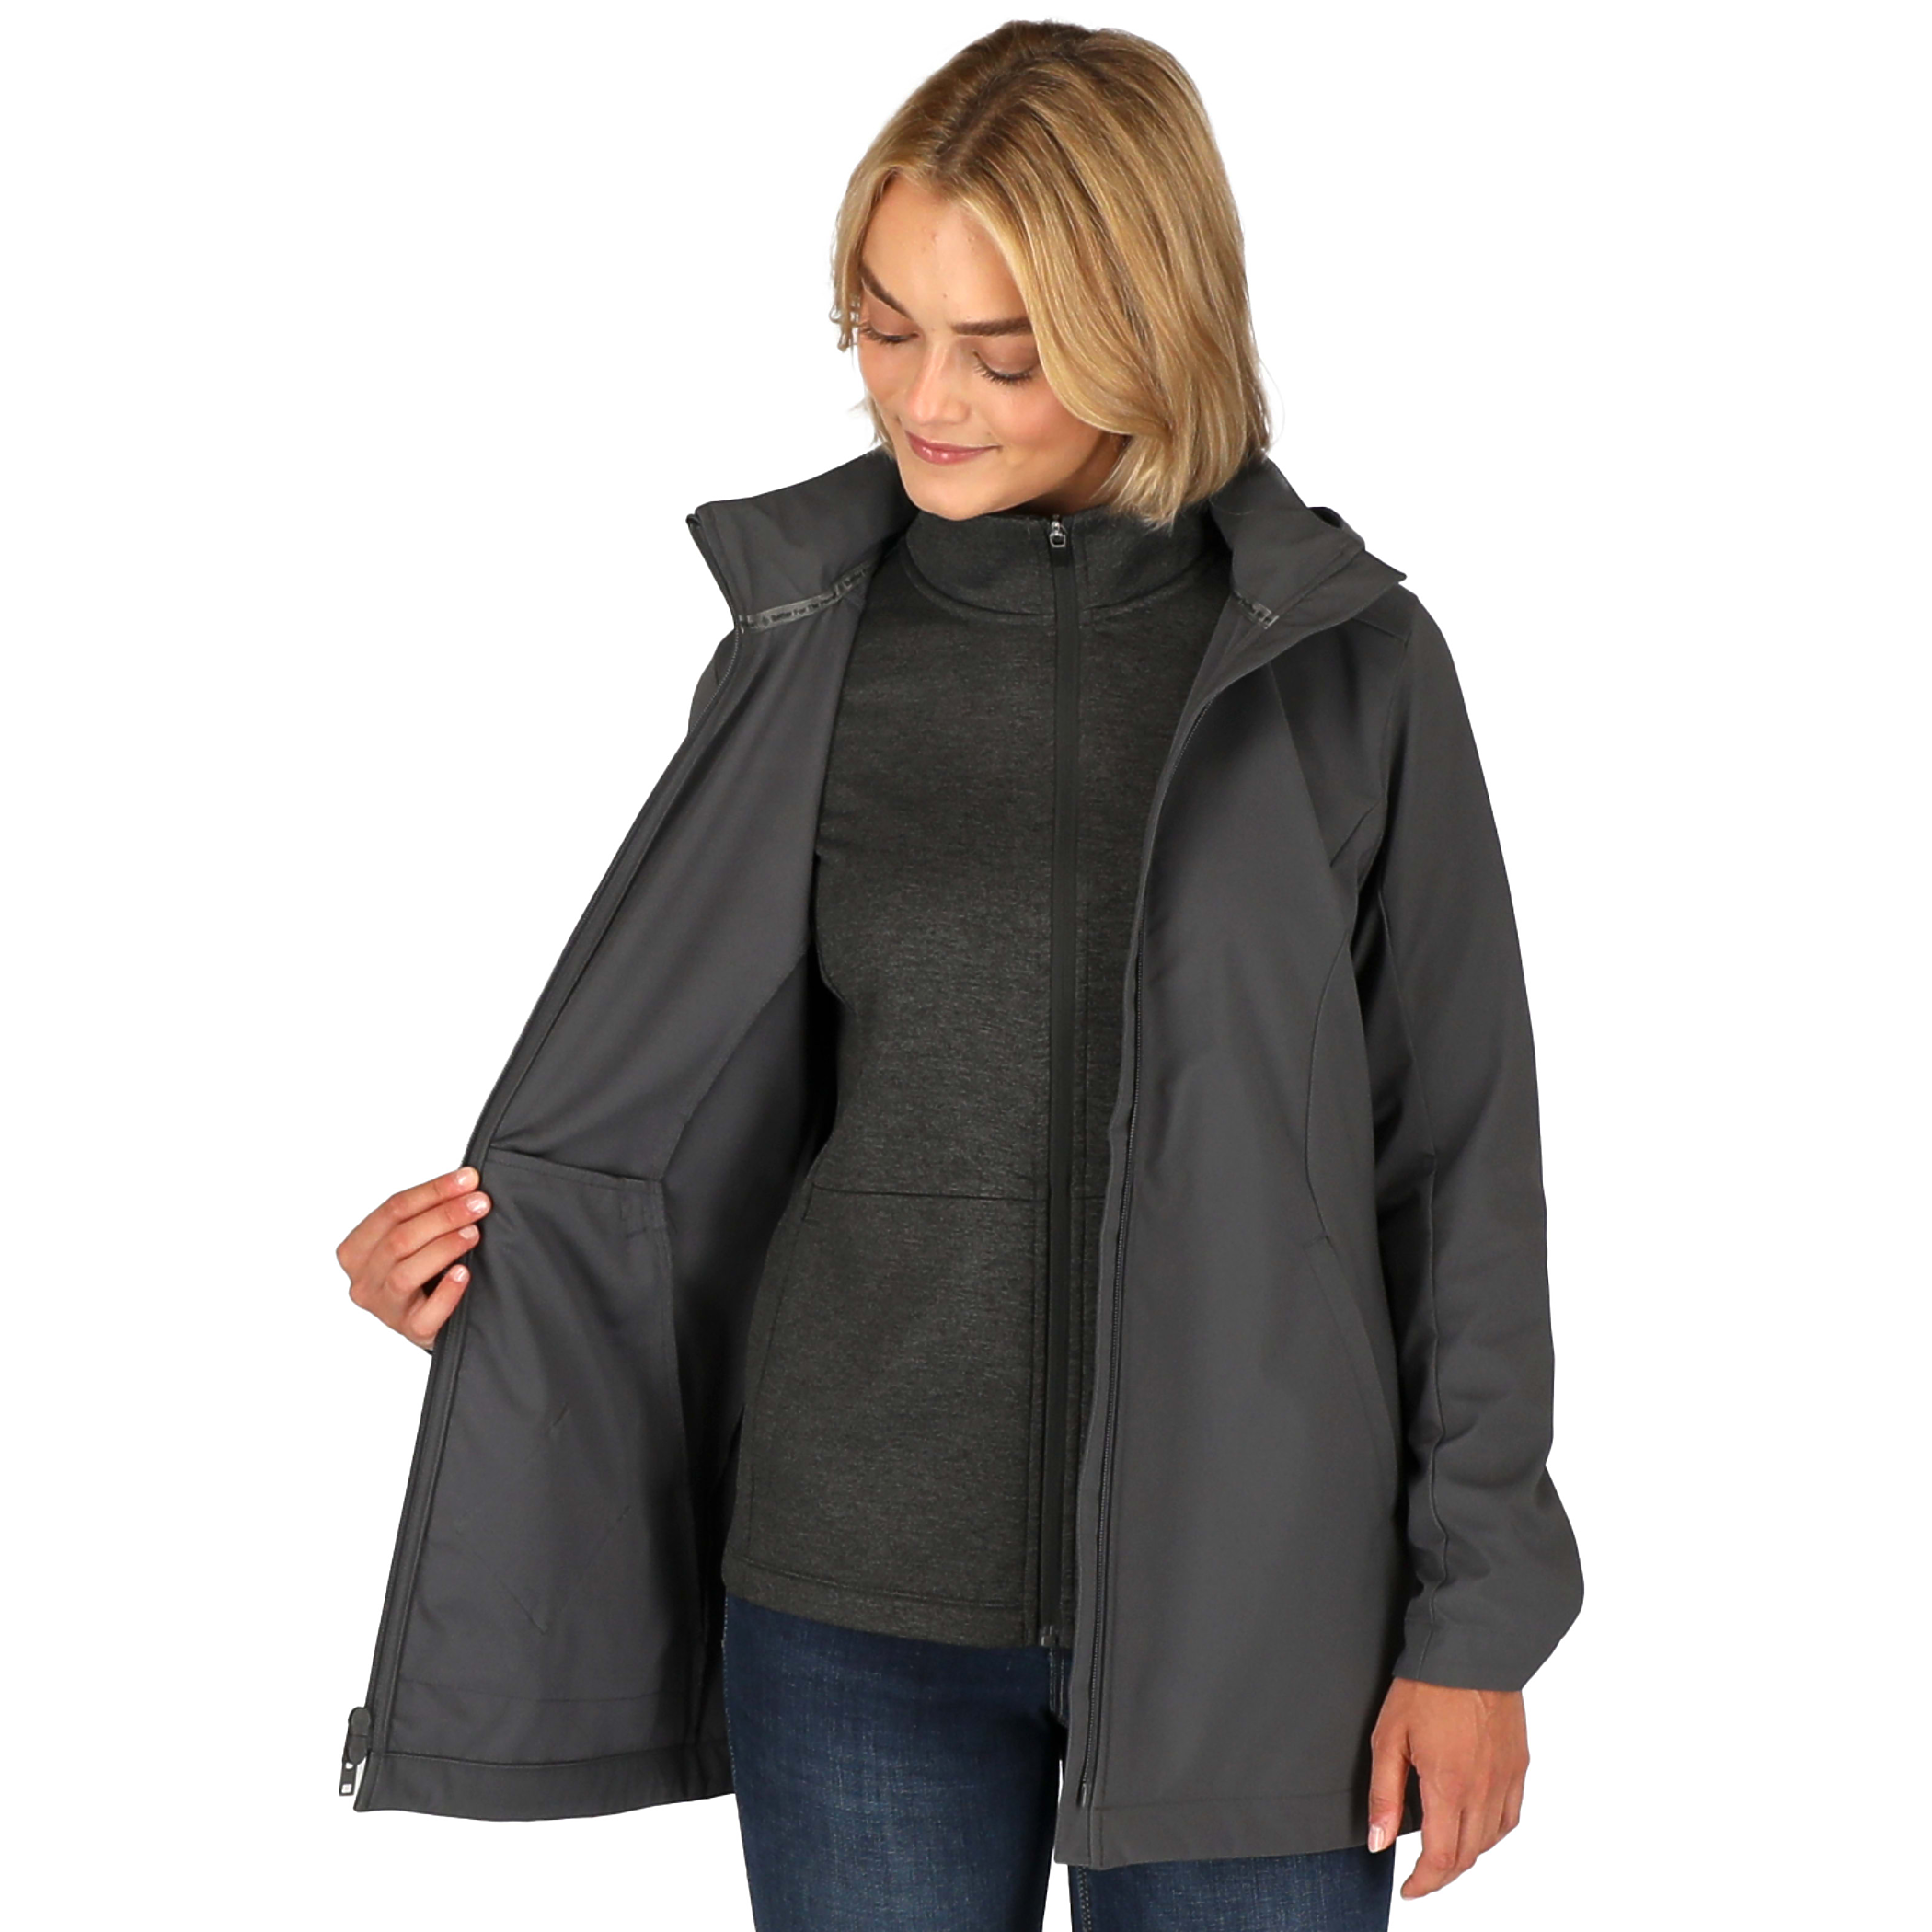 MANZANO Eco Softshell Jacket - Women's | Trimark Sportswear